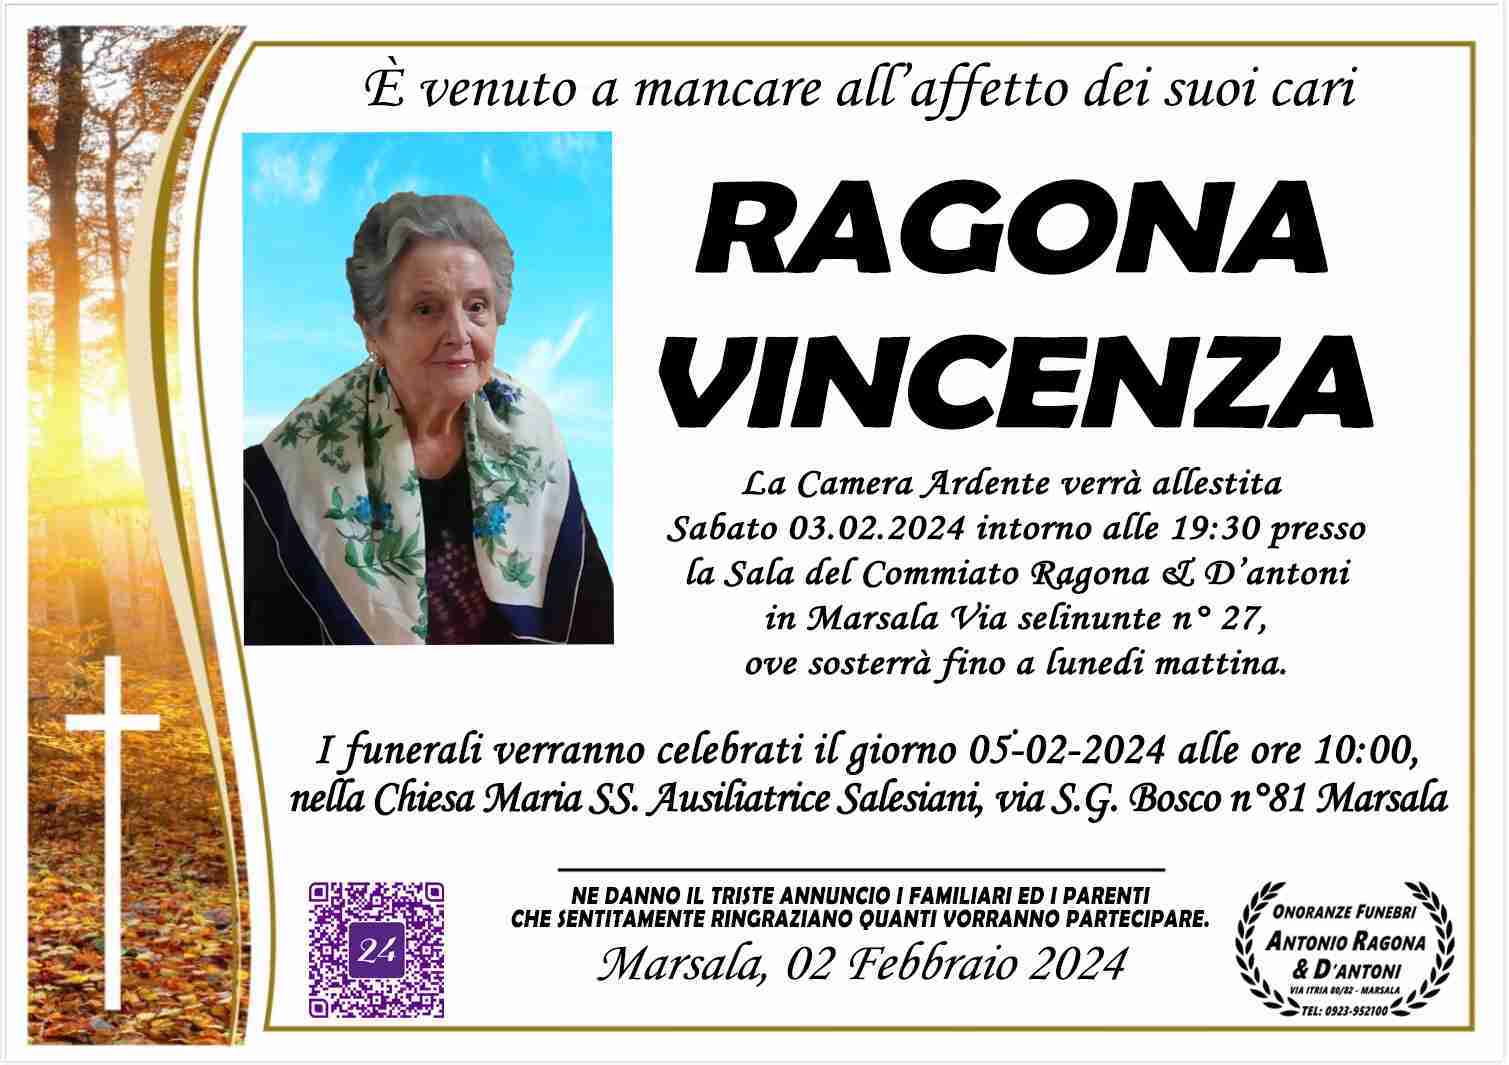 Vincenza Ragona